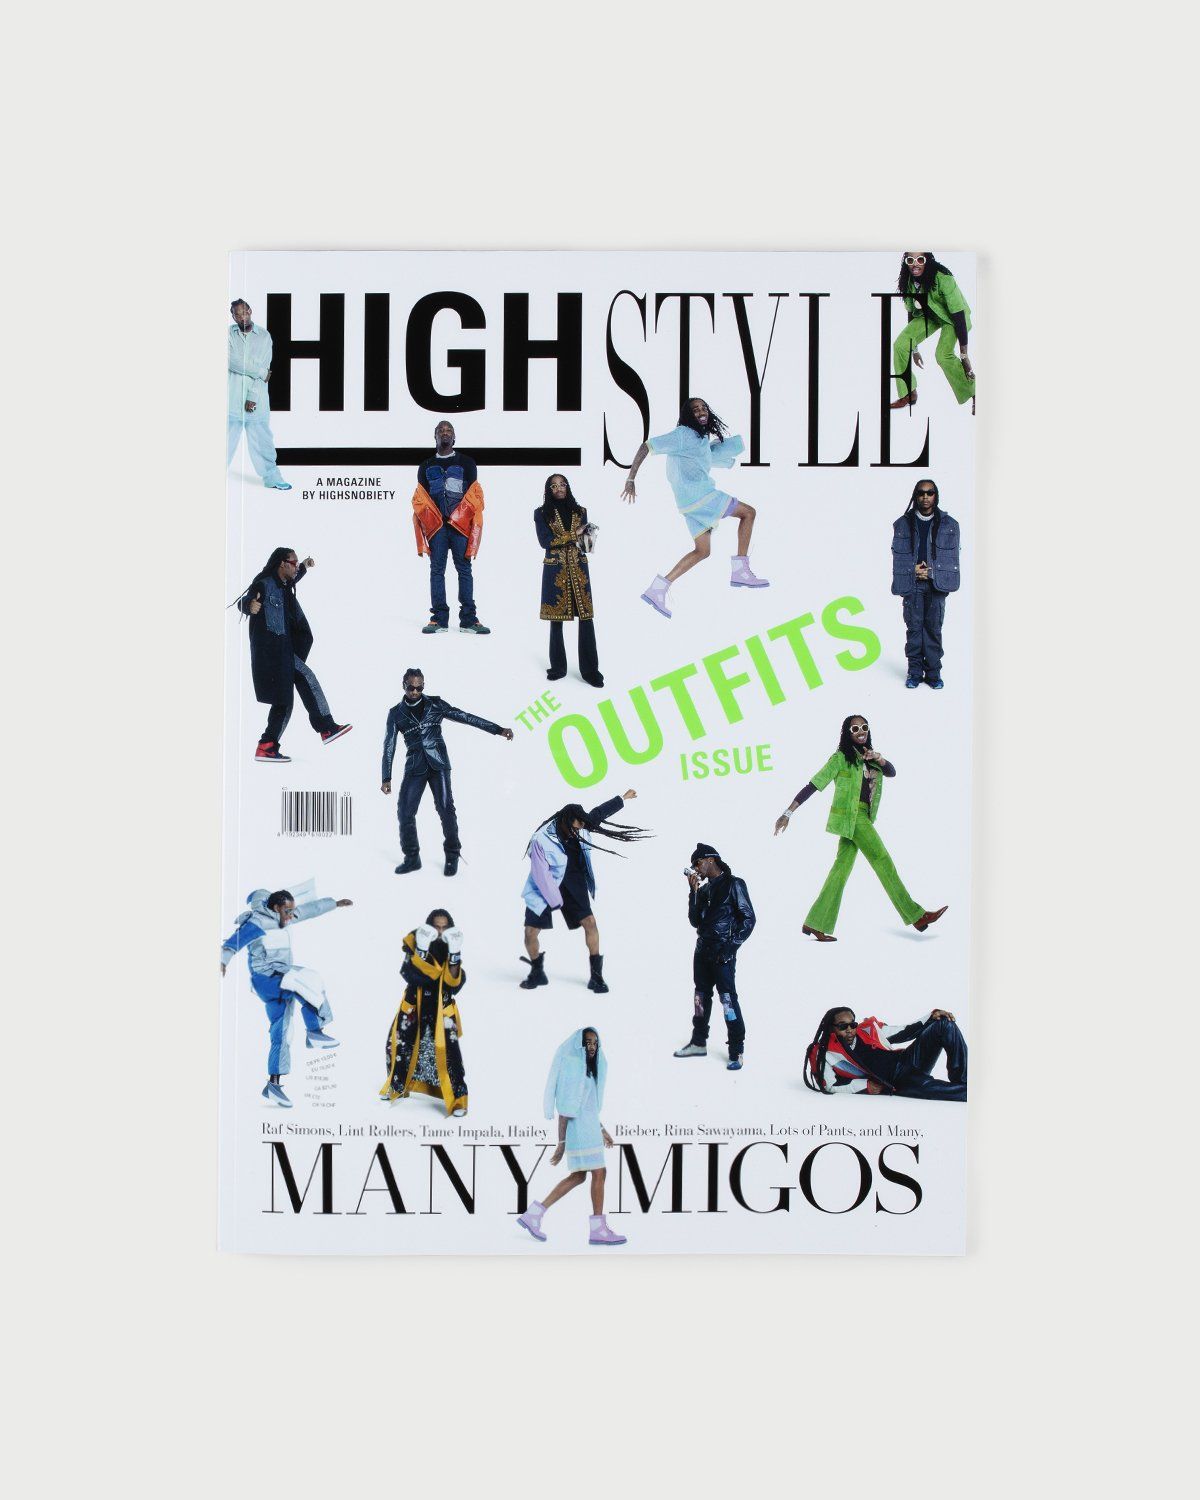 Highsnobiety – HIGHStyle - A Magazine by Highsnobiety - Image 1